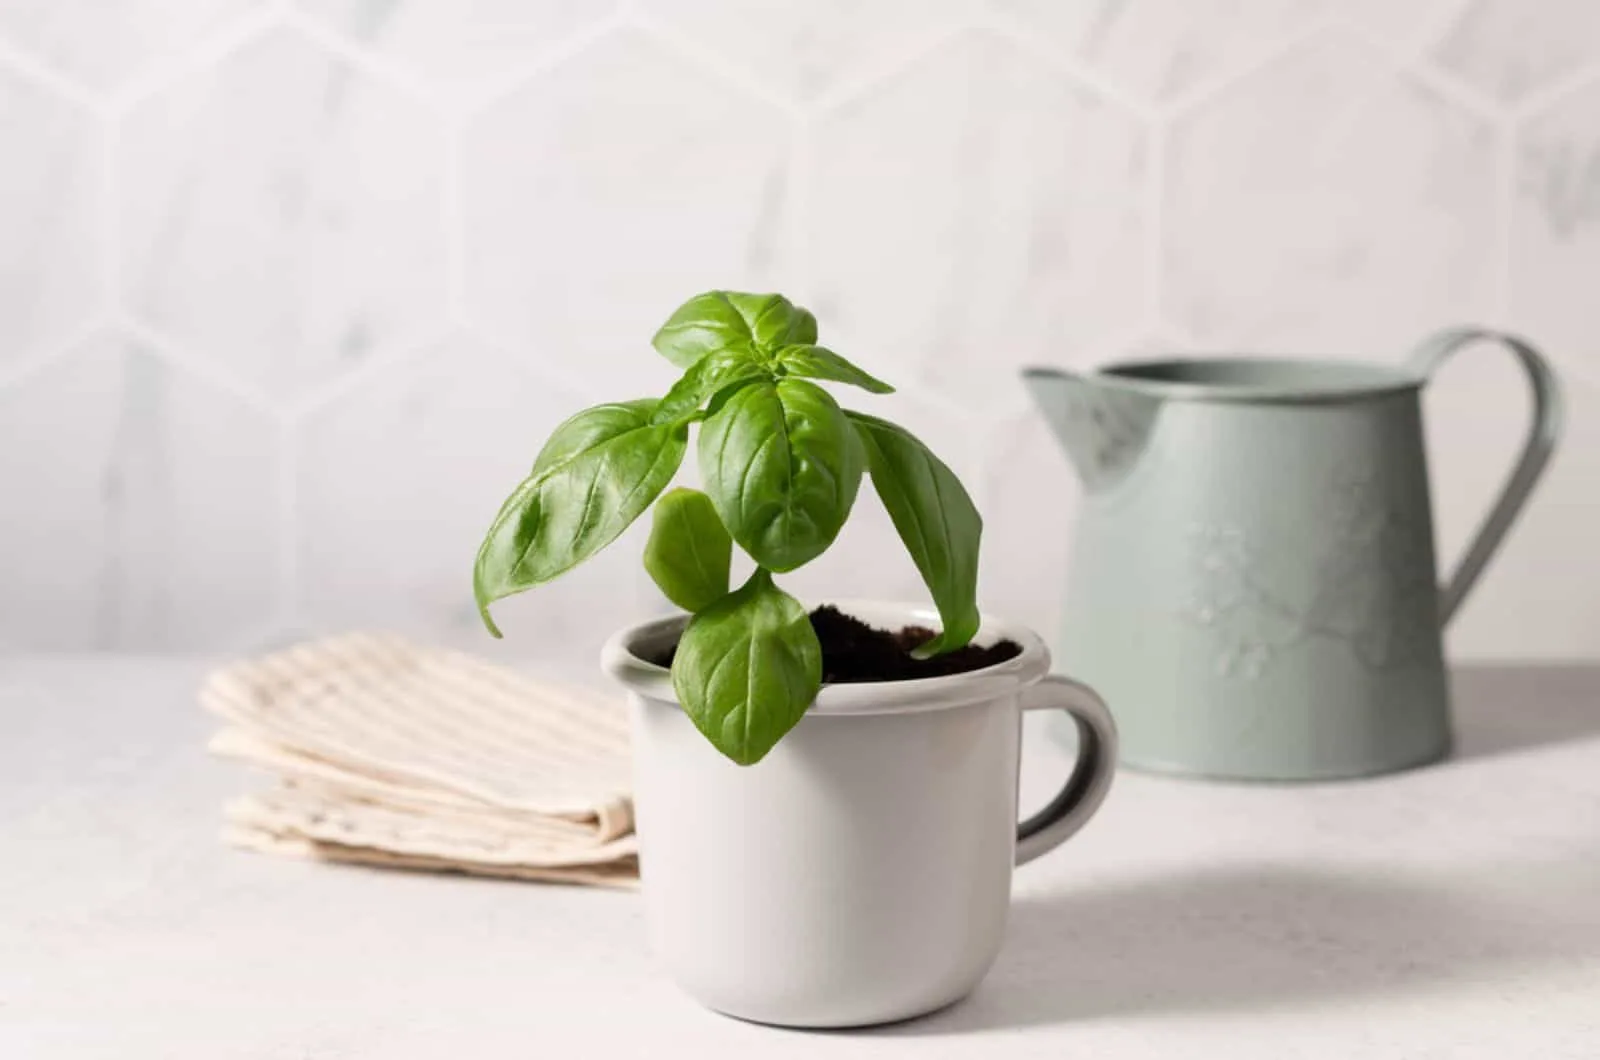 green basil plant in metal mug and vintage watercan